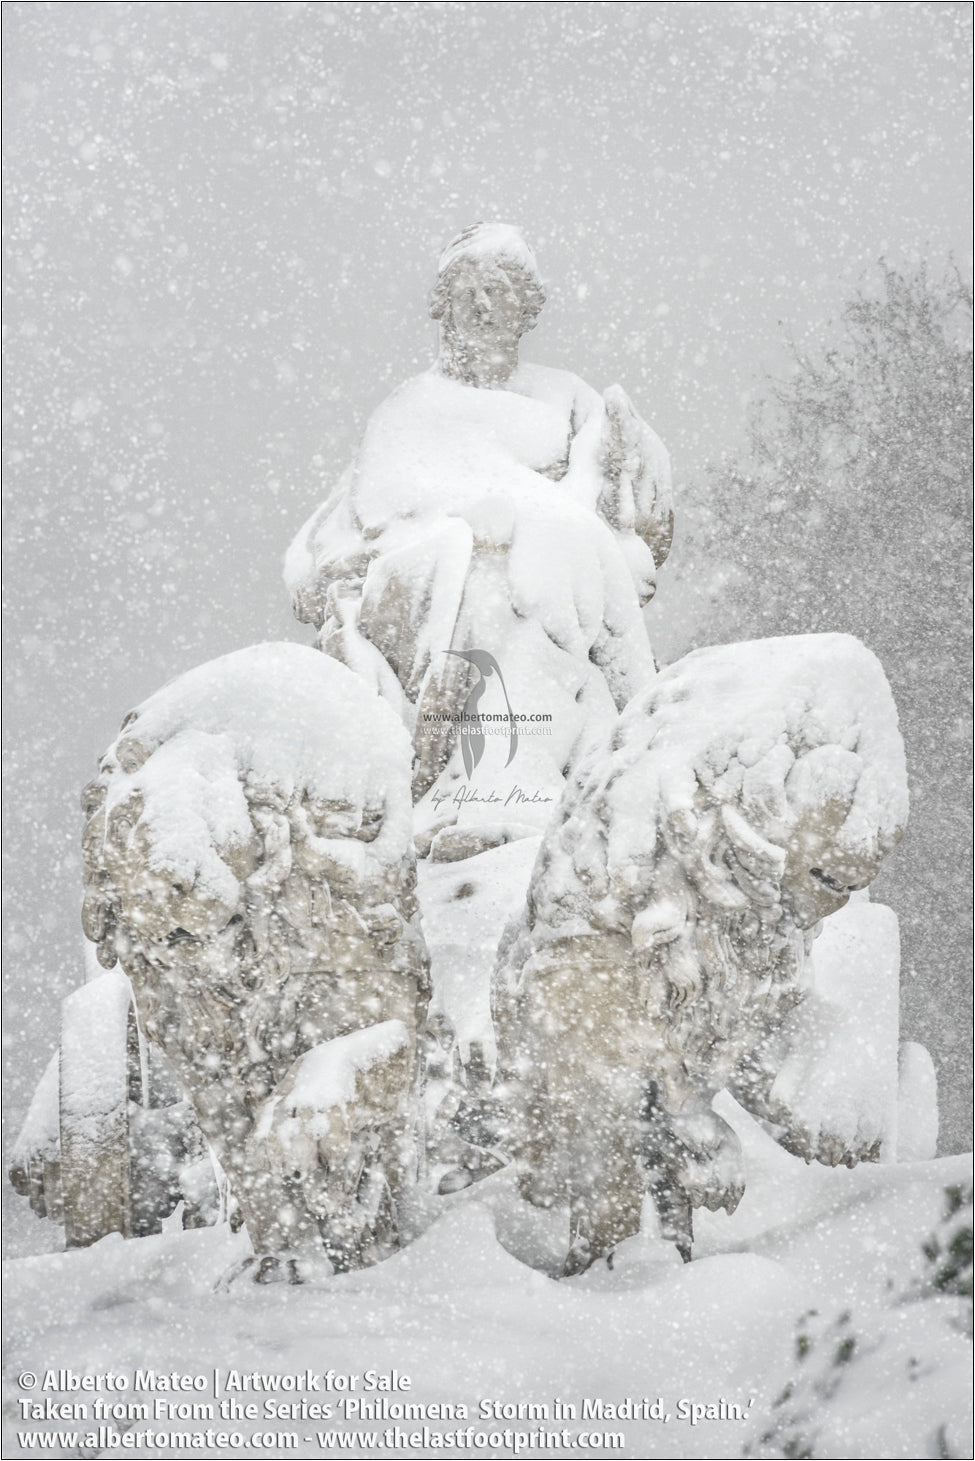 Snow on Cibeles Sculpture, Filomena Winter Snow Storm, Madrid, Spain.